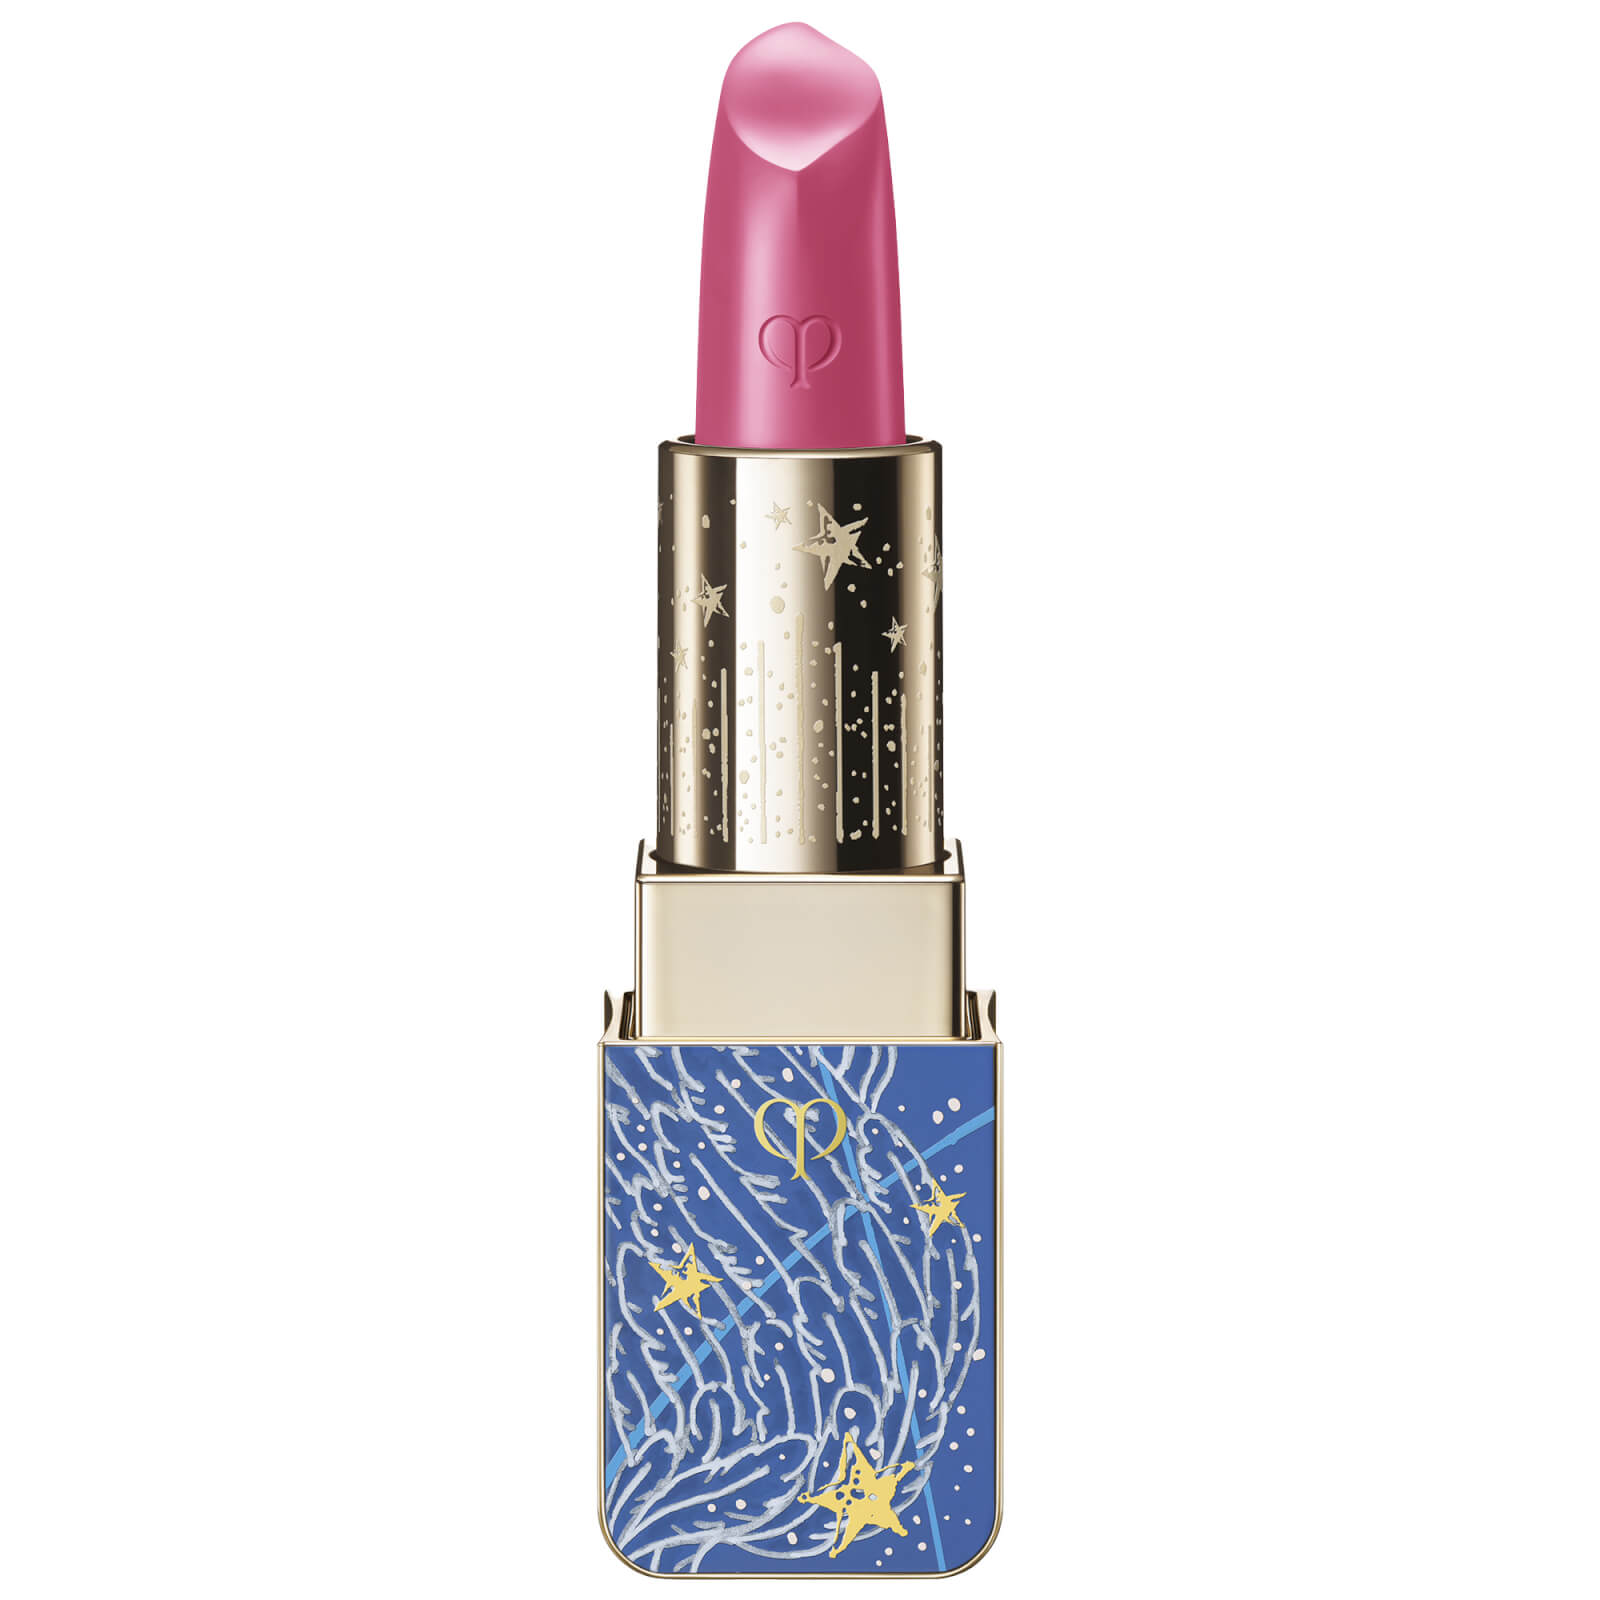 Clé de Peau Beauté Lipstick 4g (Various Shades) - 521 Starlight Pink